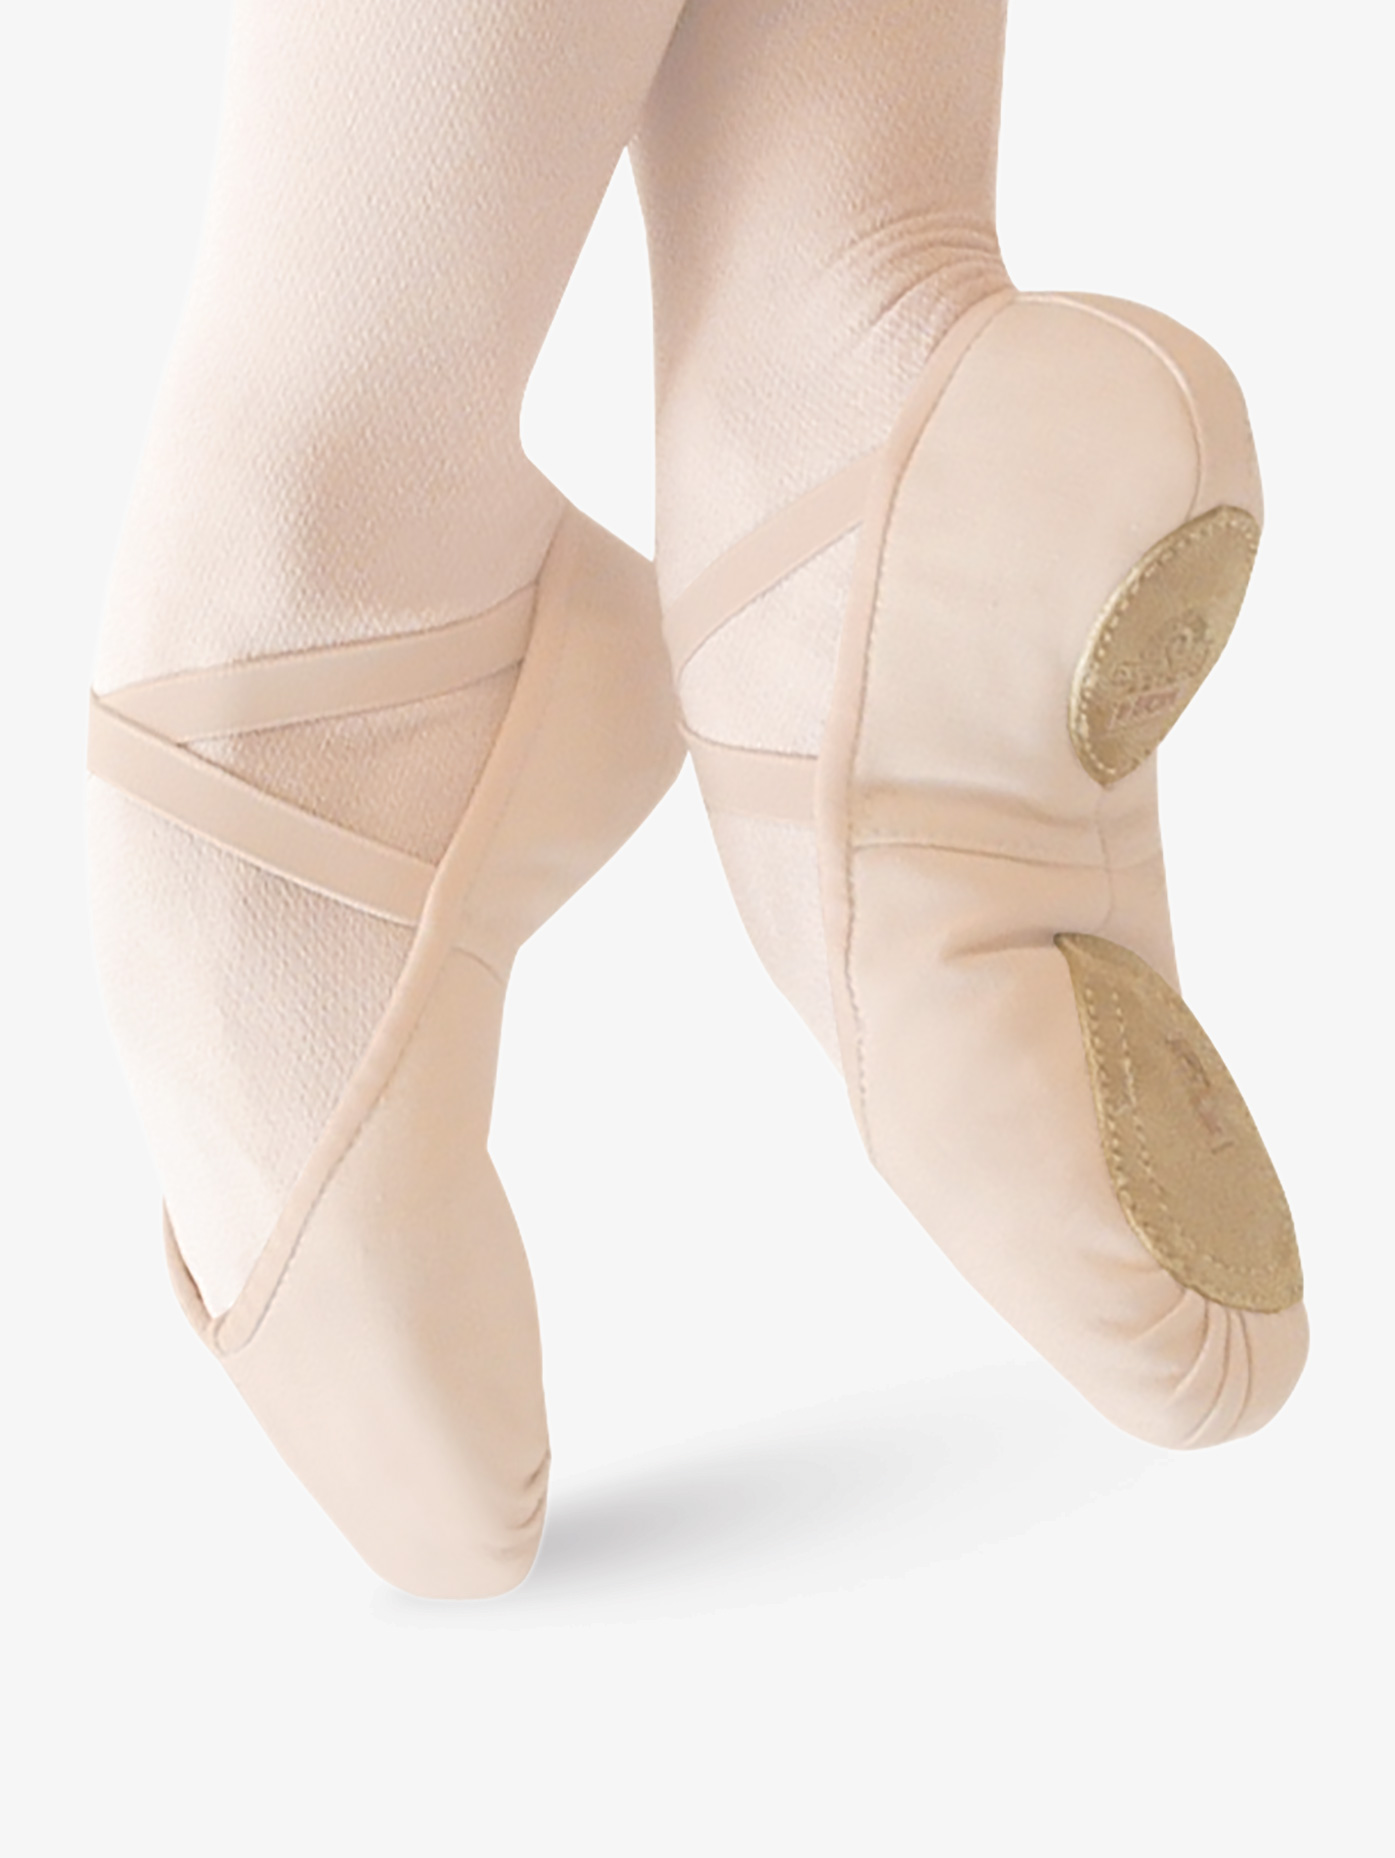 Grishko Ballet Slipper Size Chart